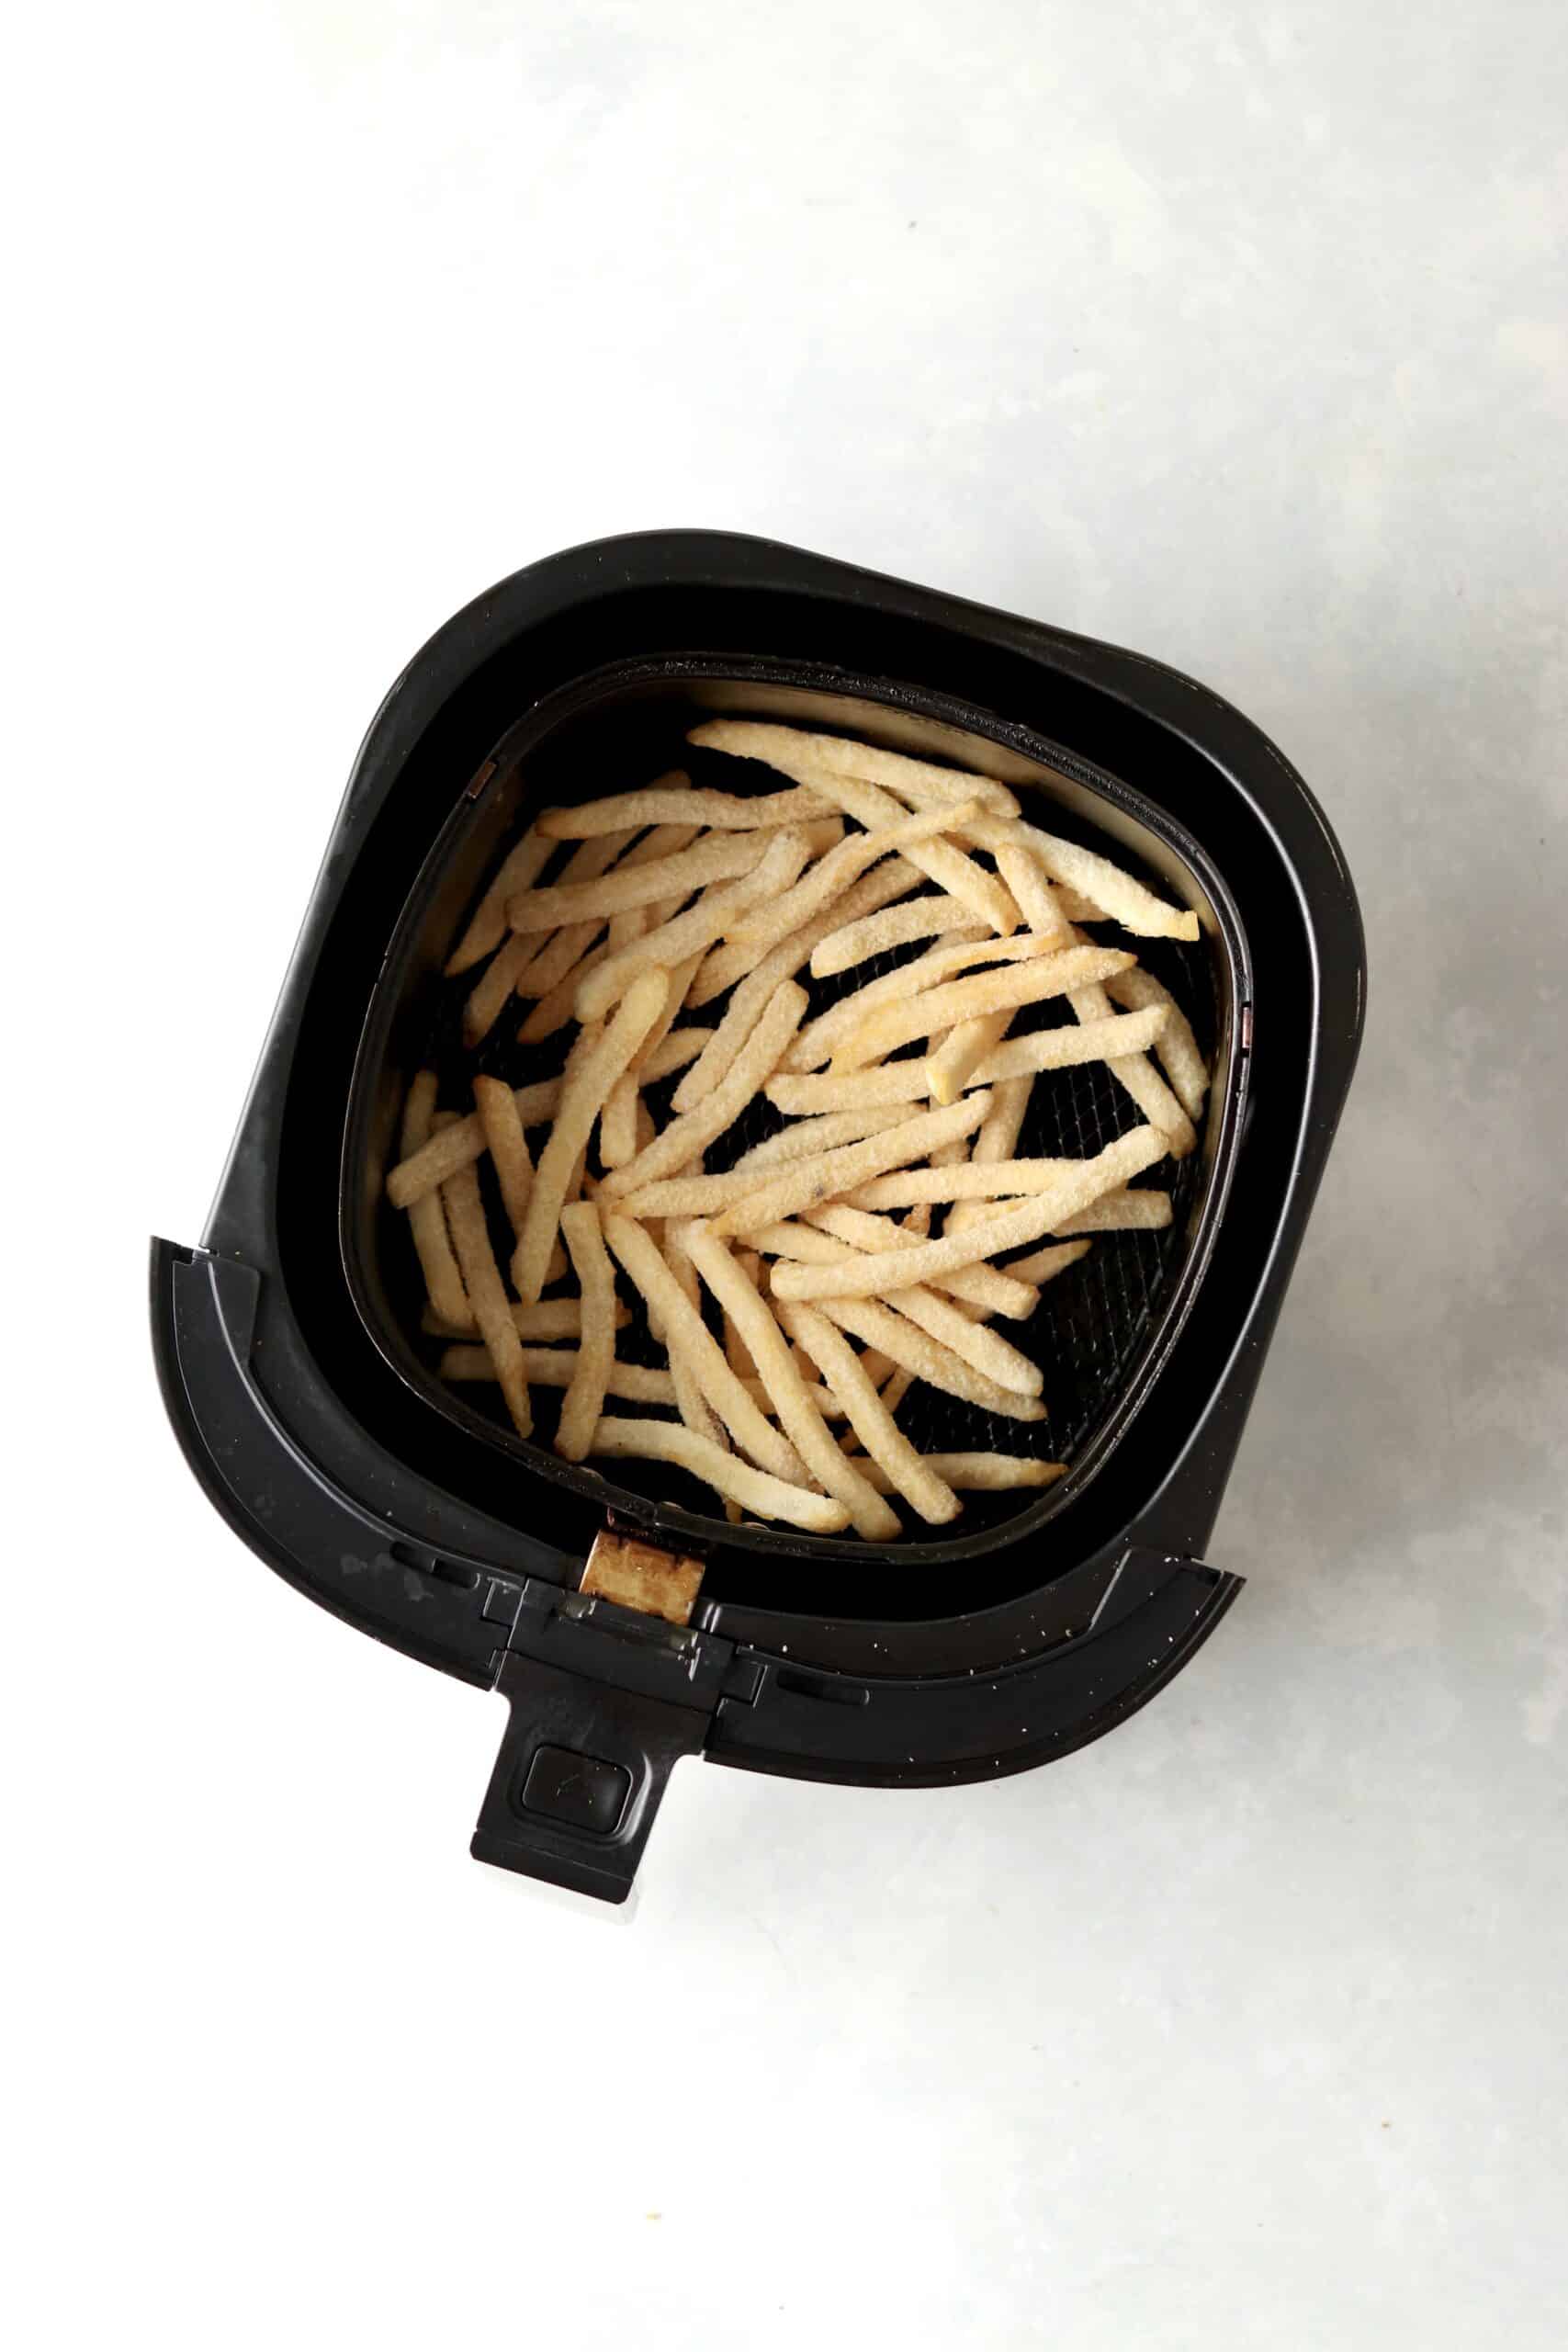 frozen fast food style fries in air fryer